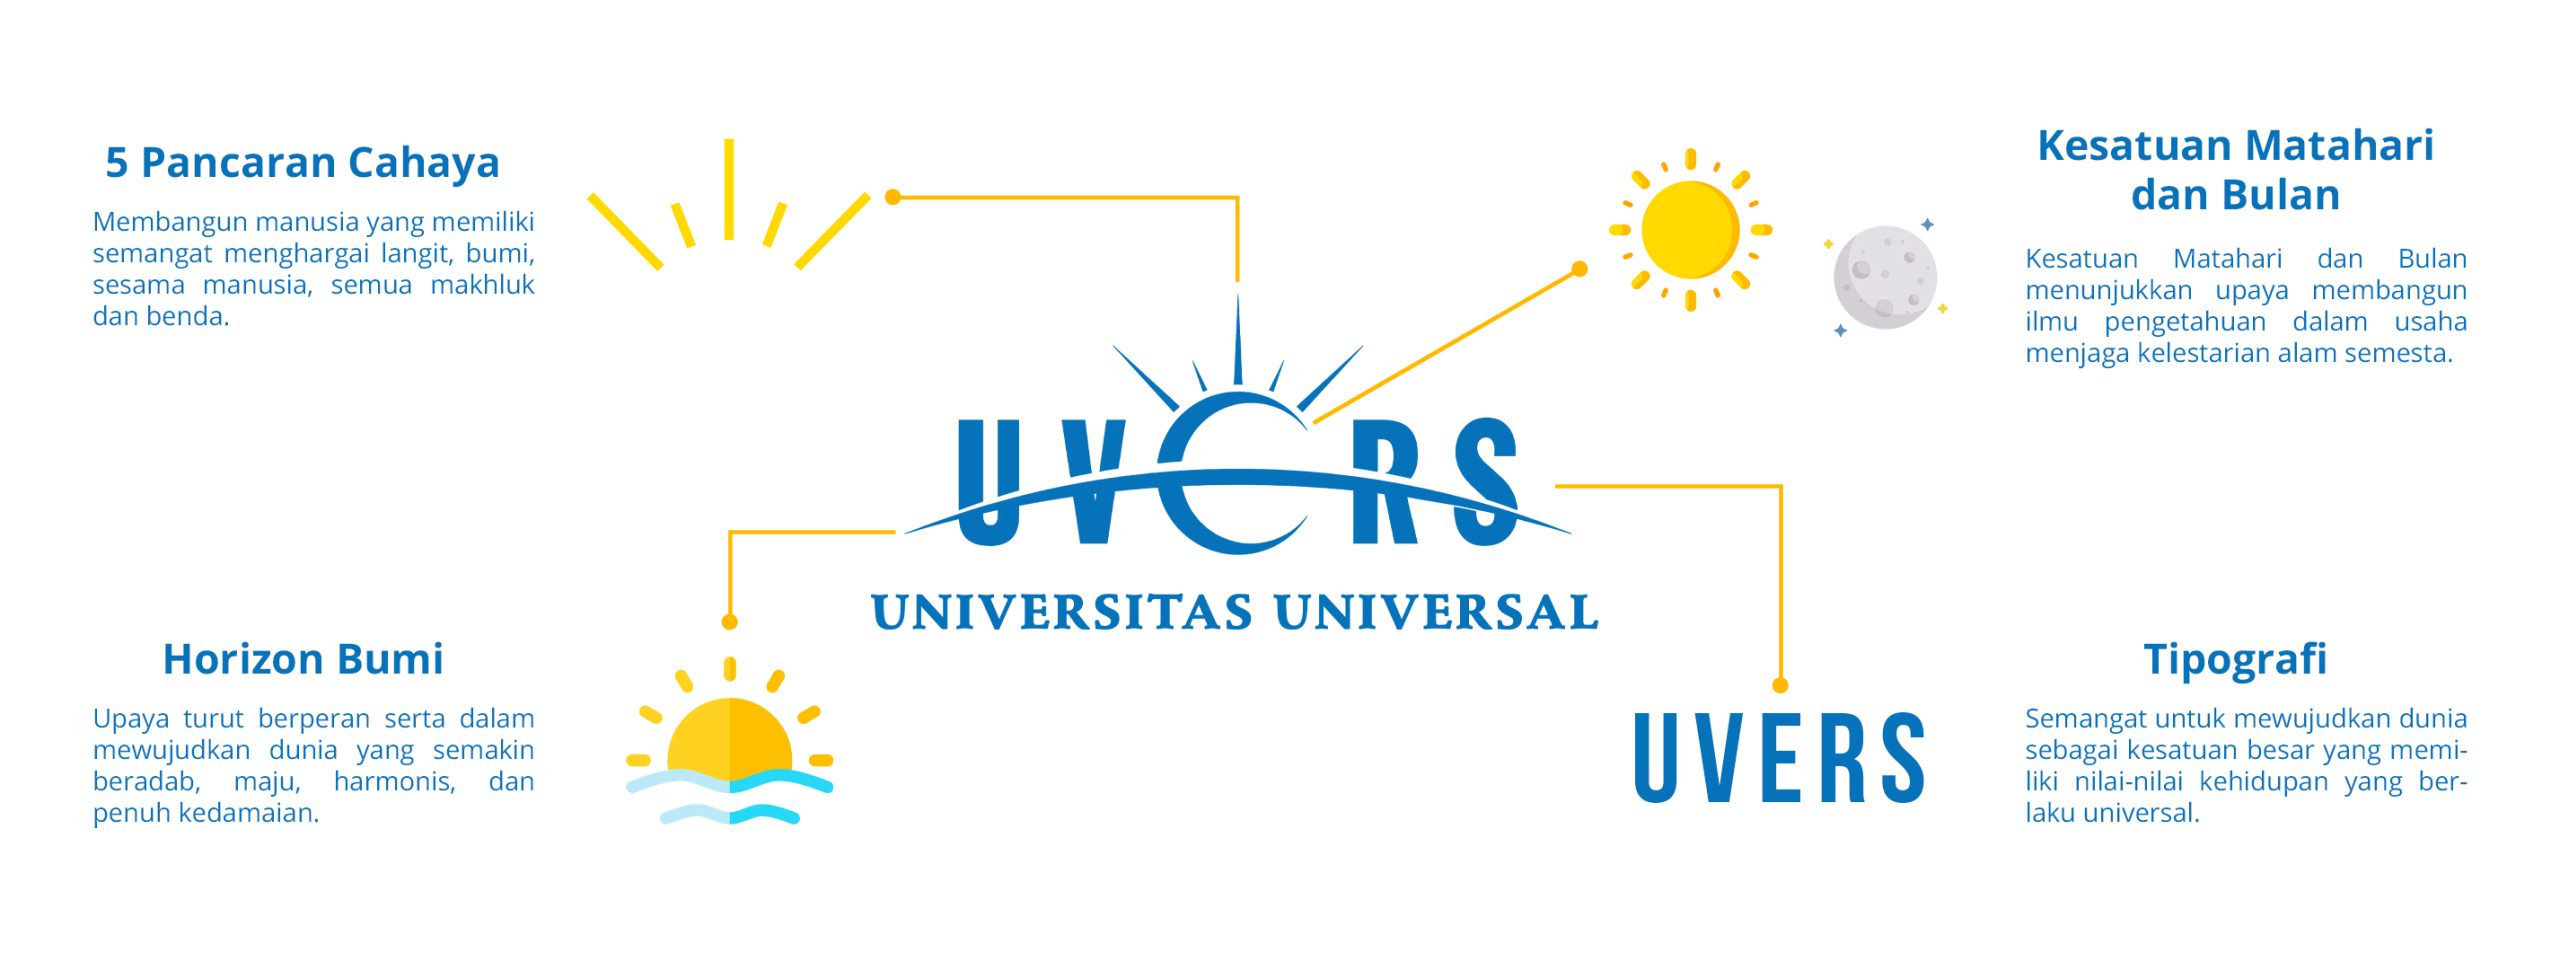 Identitas Universitas Universal